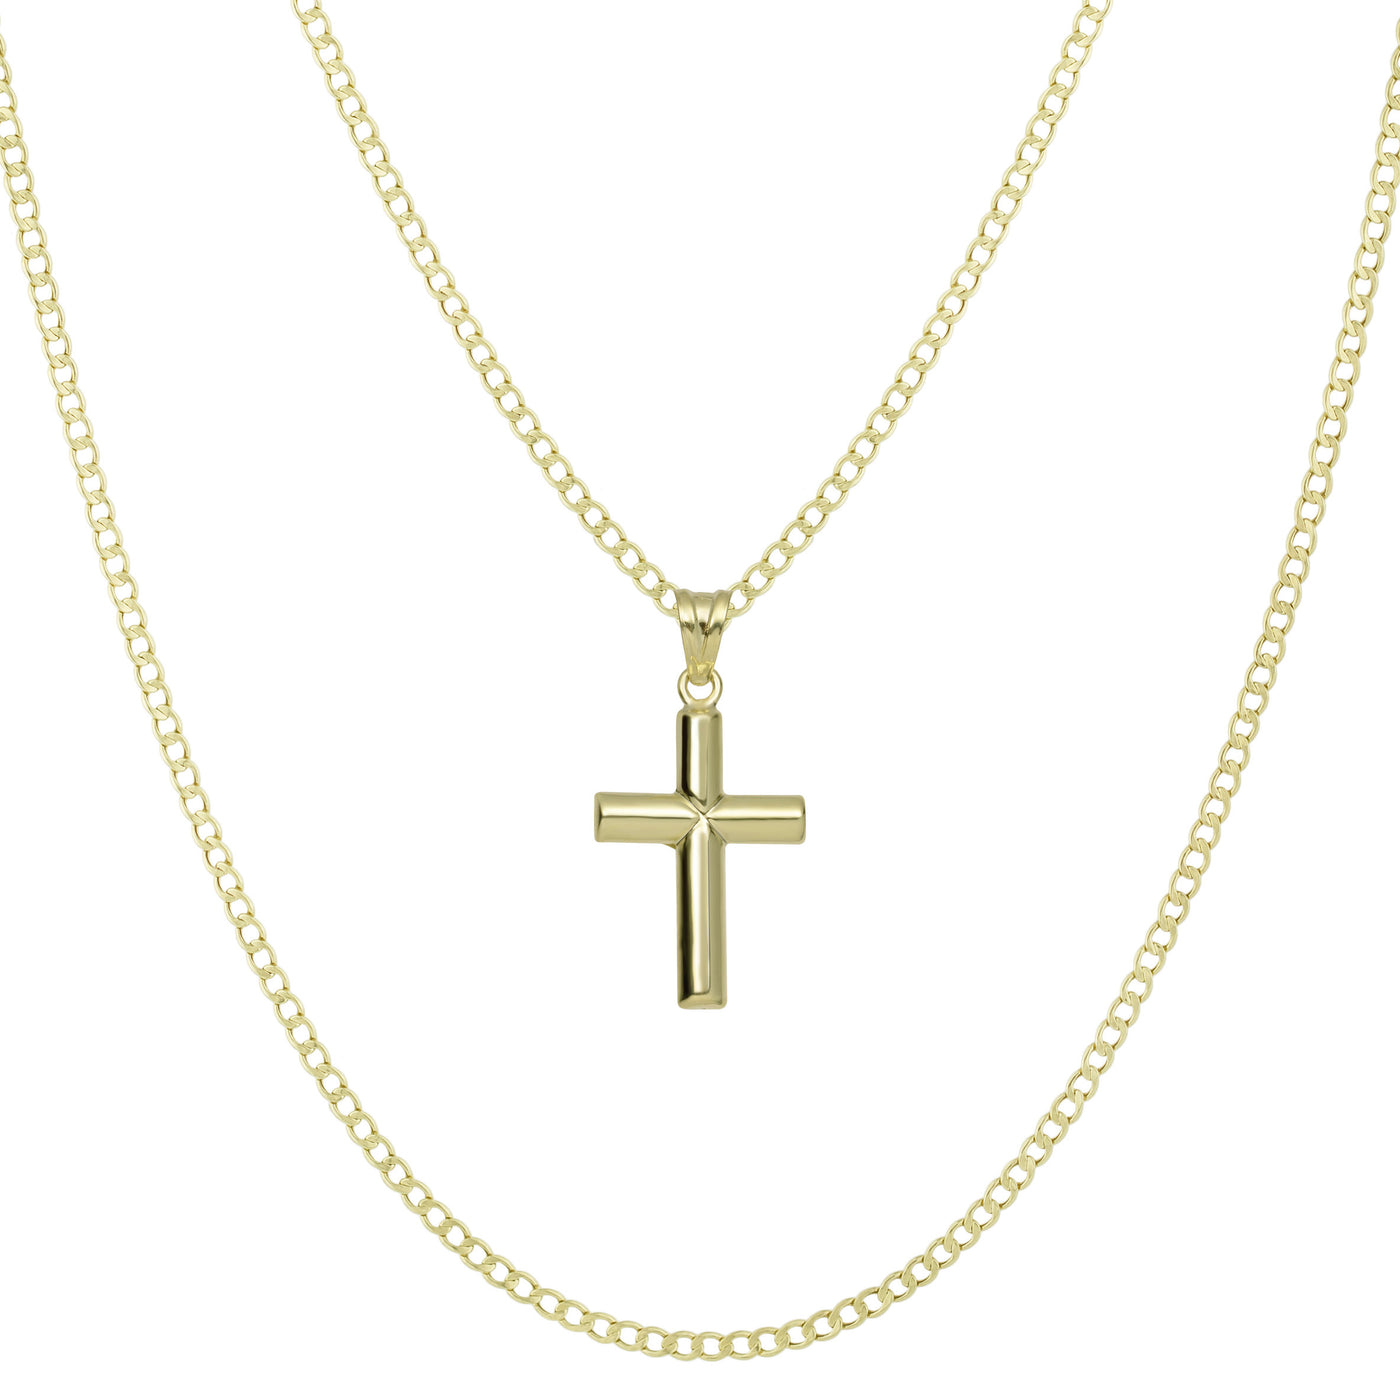 1 3/8" Jesus Cross Crucifix Pendant & Chain Necklace Set 10K Yellow White Gold